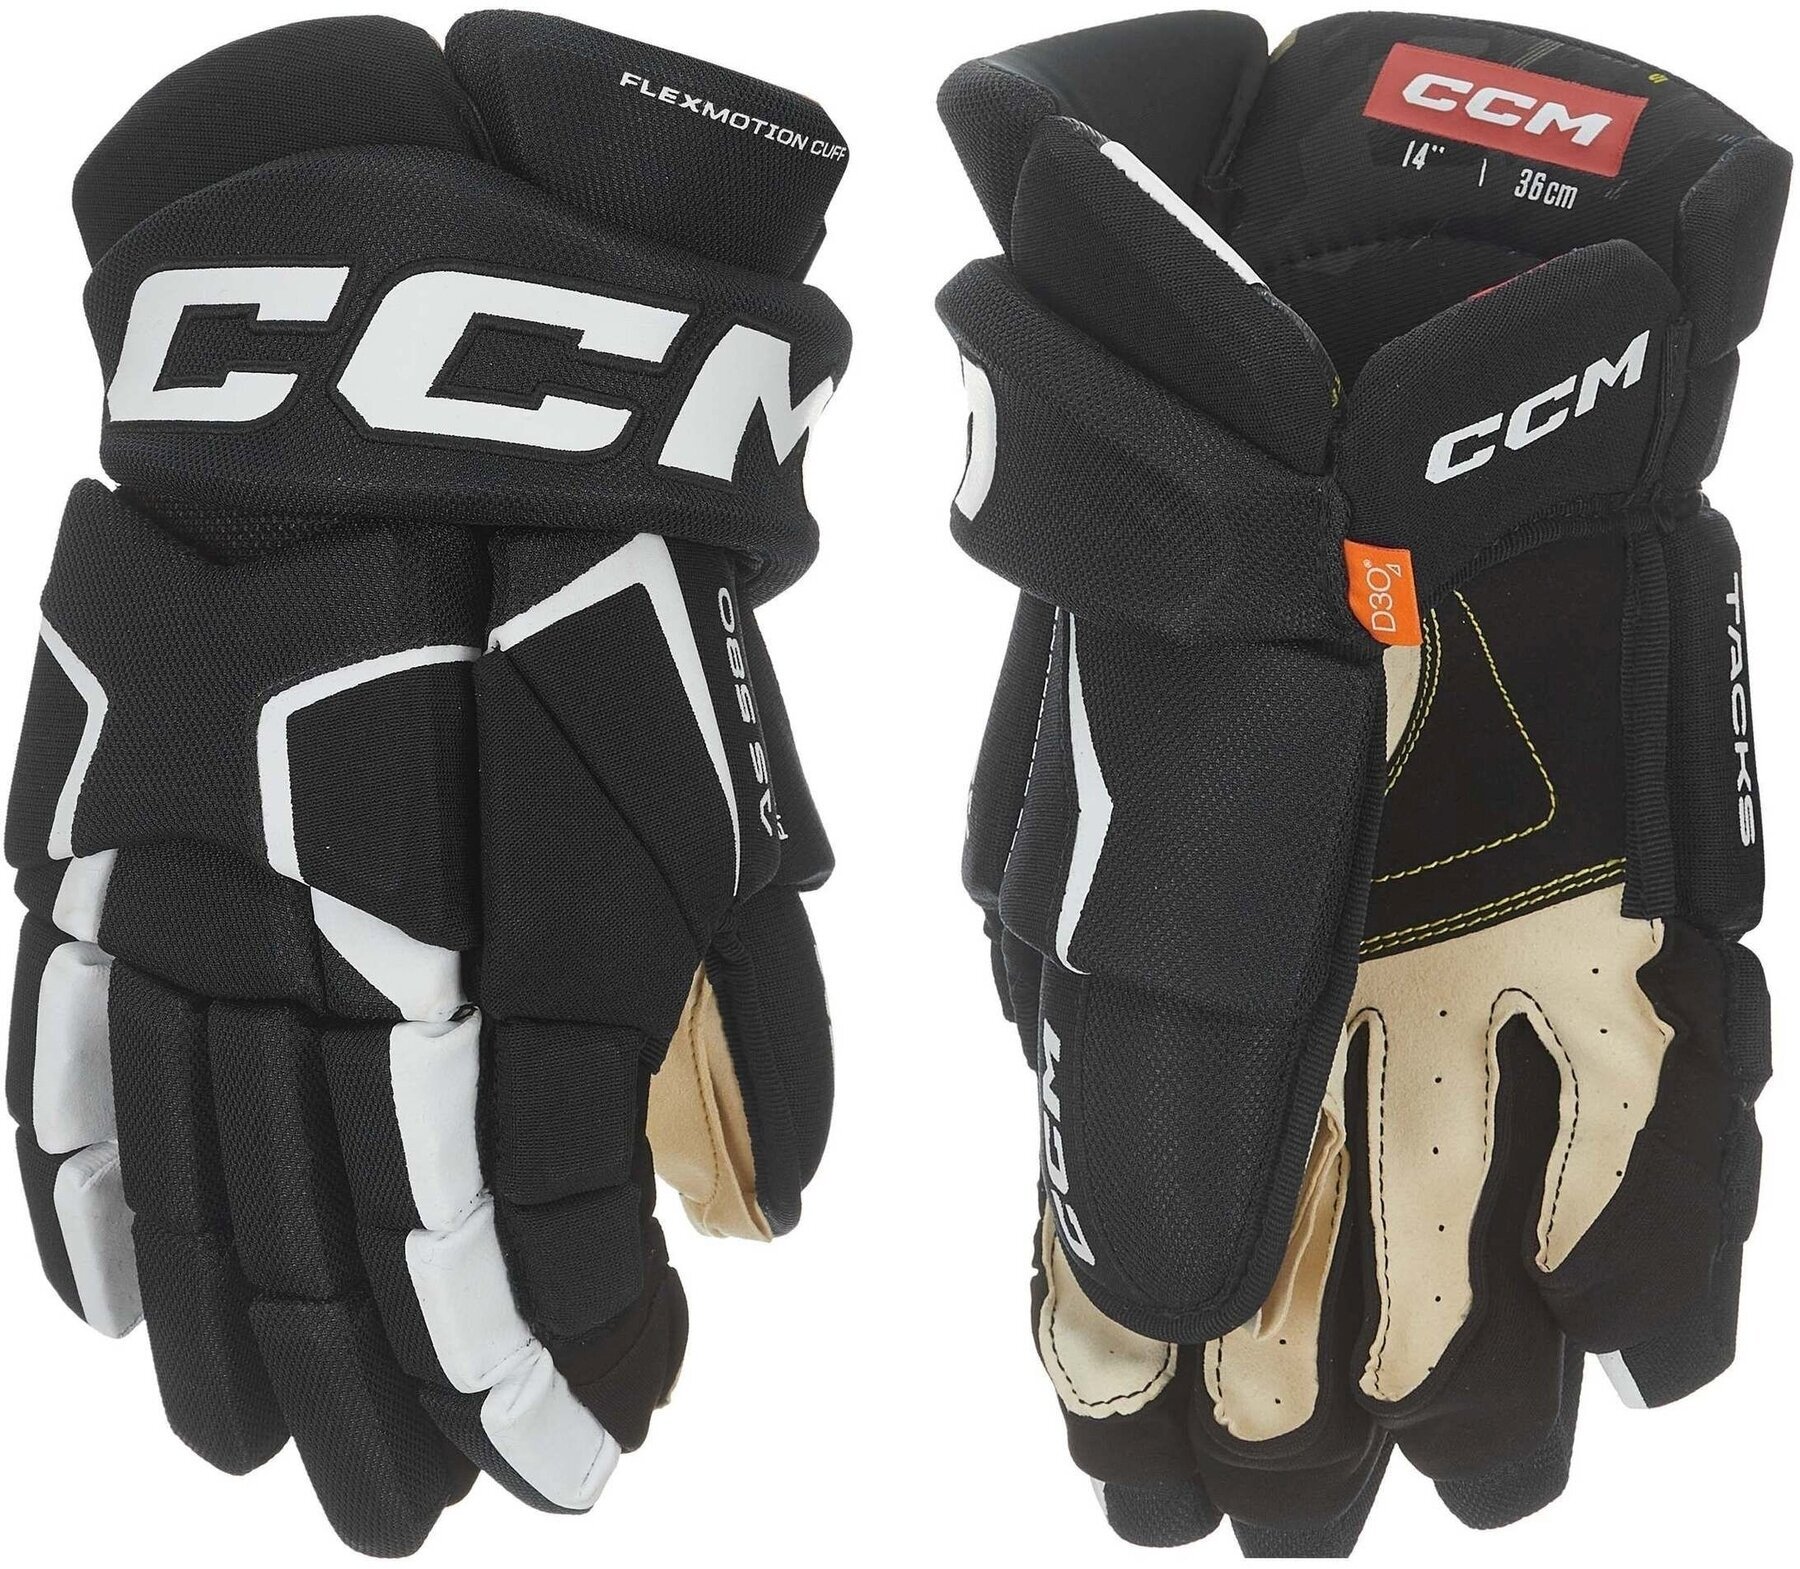 Eishockey-Handschuhe CCM Tacks AS 580 SR 14 Black/White Eishockey-Handschuhe